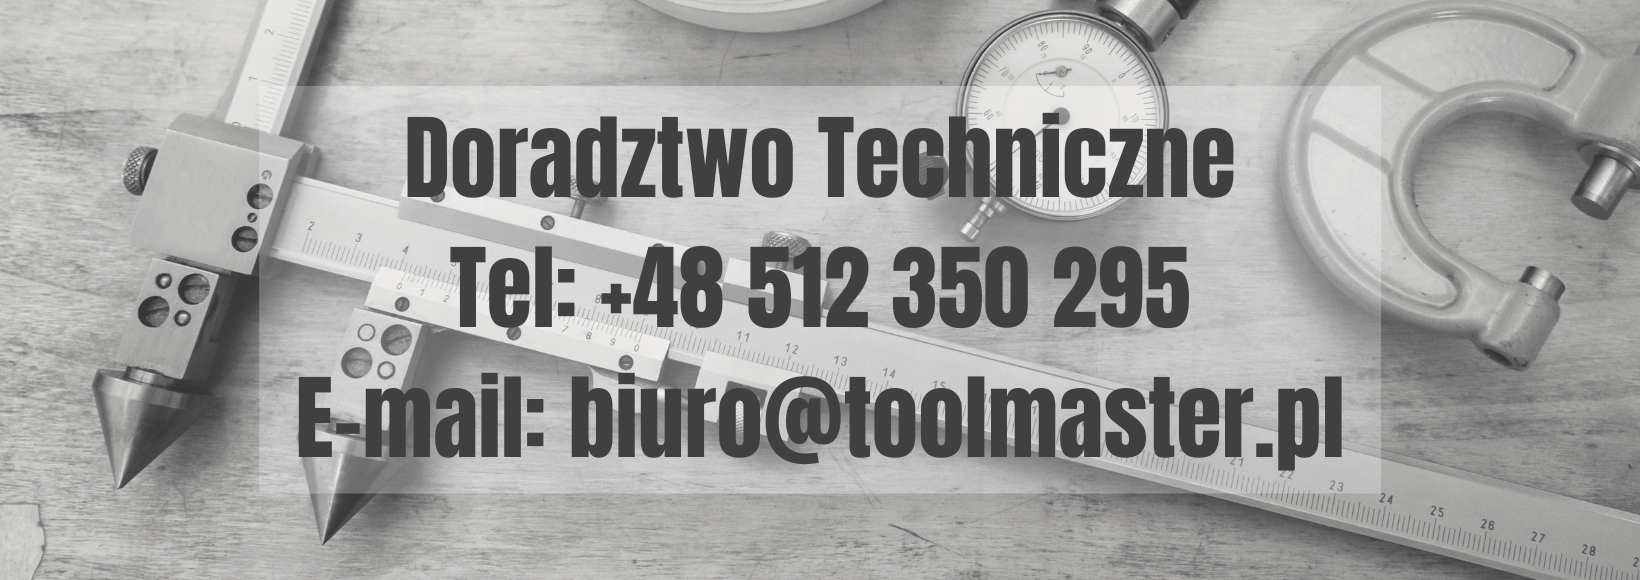 Doradztwo Techniczne Tel +48 512 350 295 E-mail biuro@toolmaster.pl-min